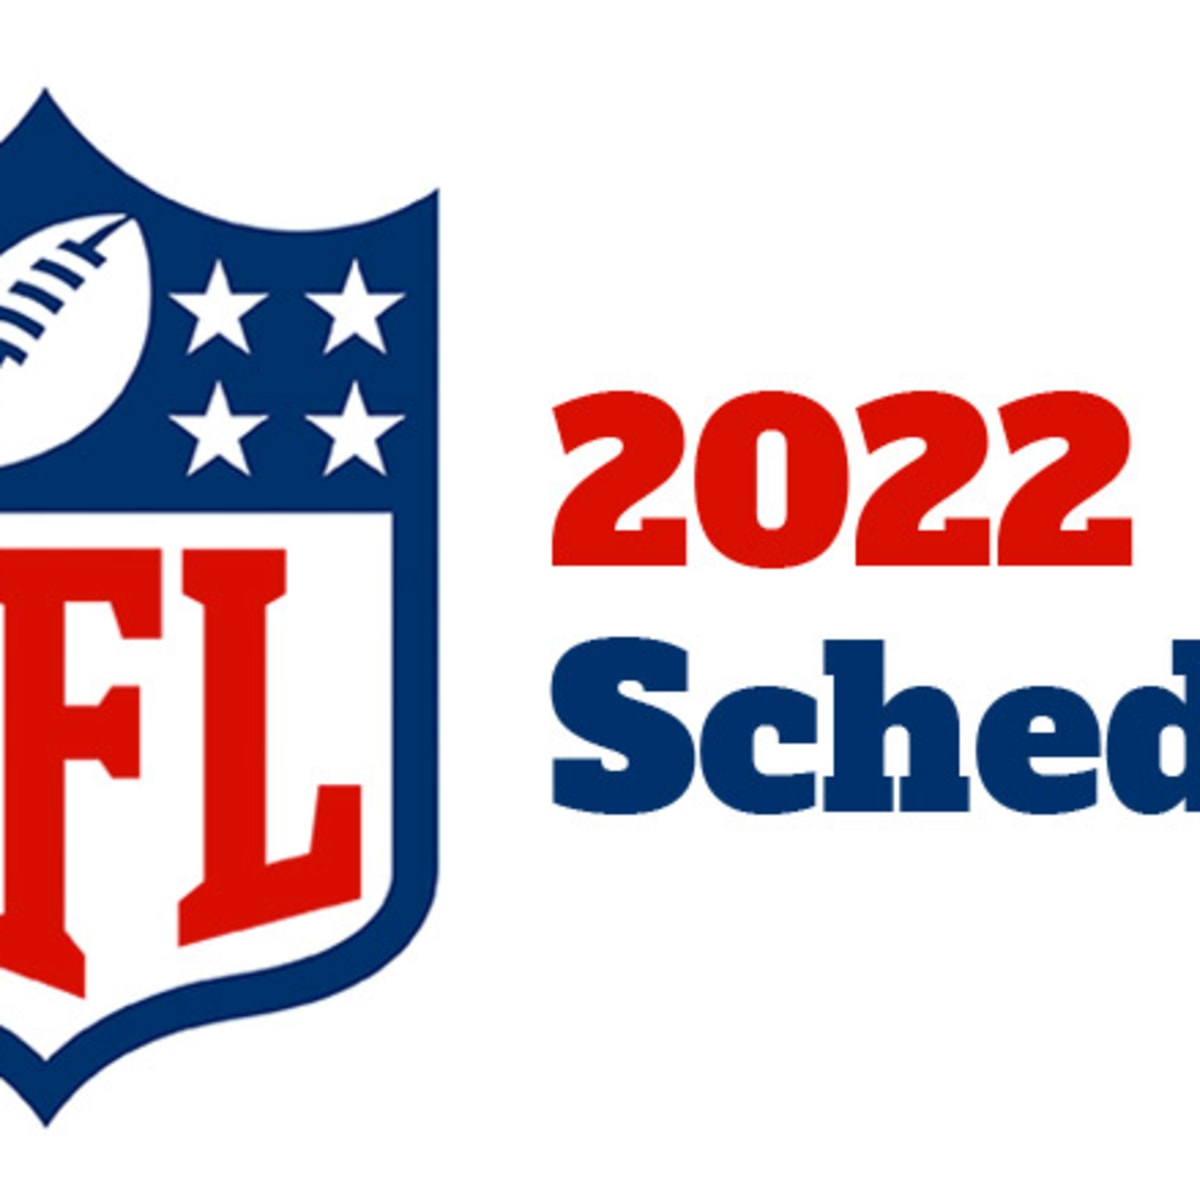 nfl 2022 schedule week 1